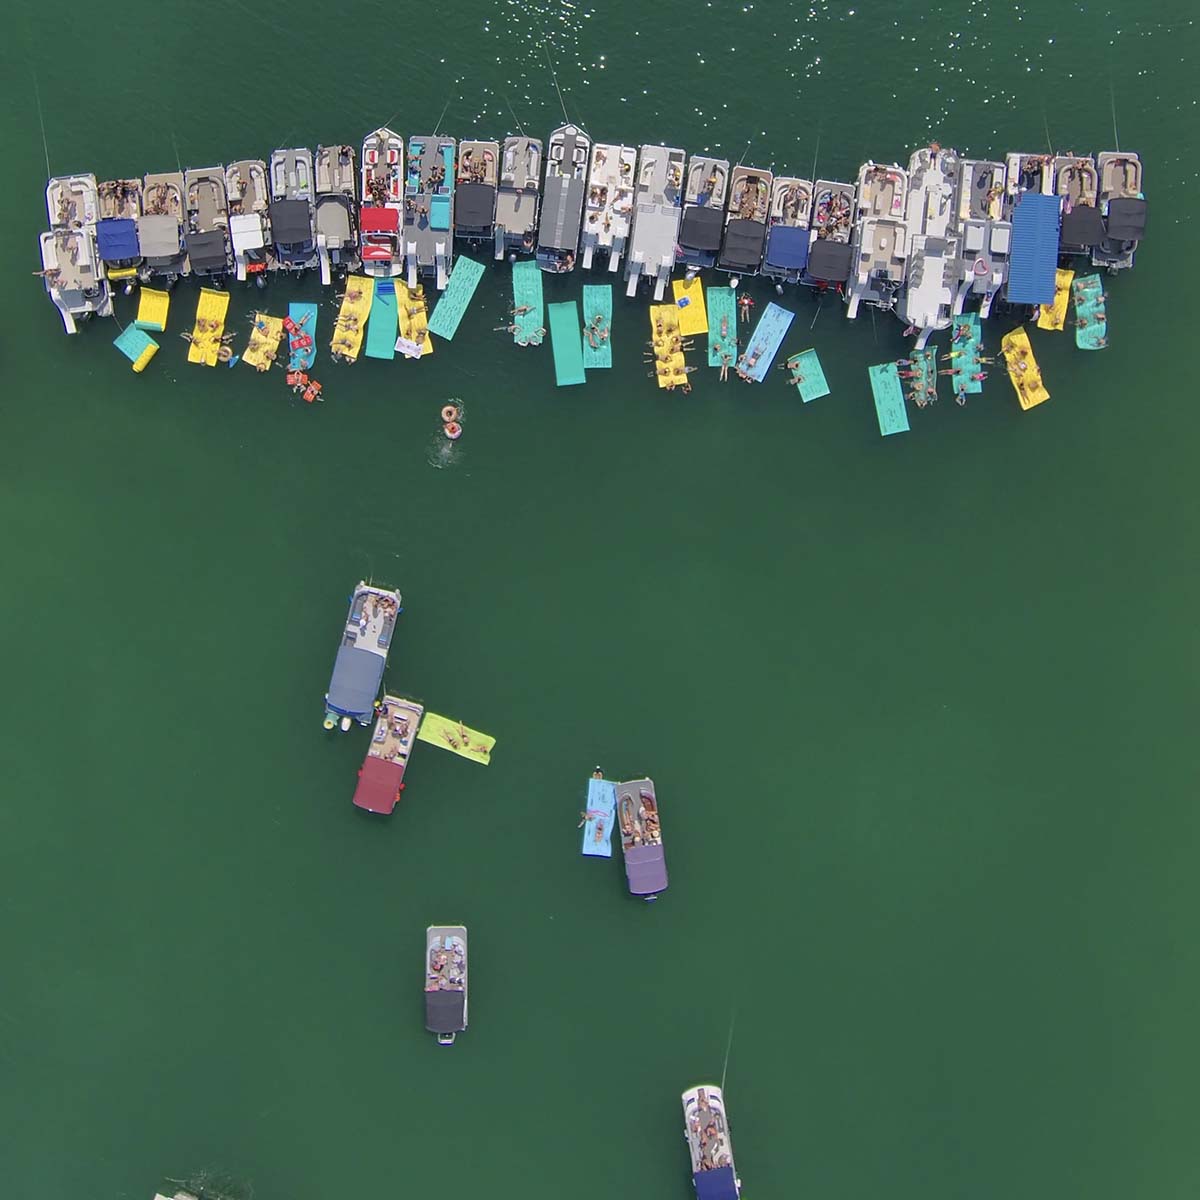 Centex Boat Rentals - Lake Travis Party Boat Rentals